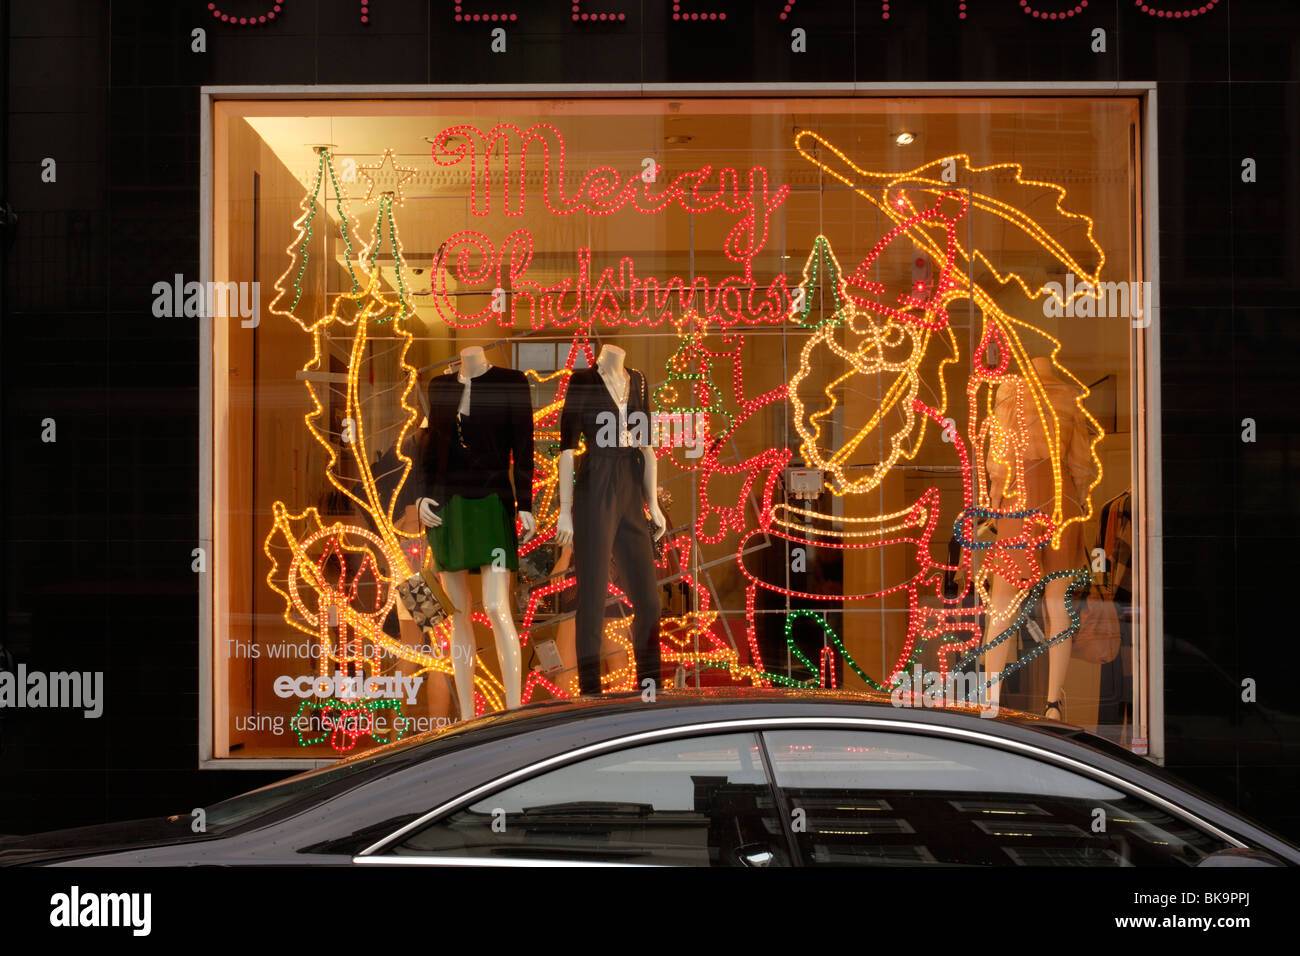 Stella McCartney shop. Christmas display using Ecotricity Stock Photo ...